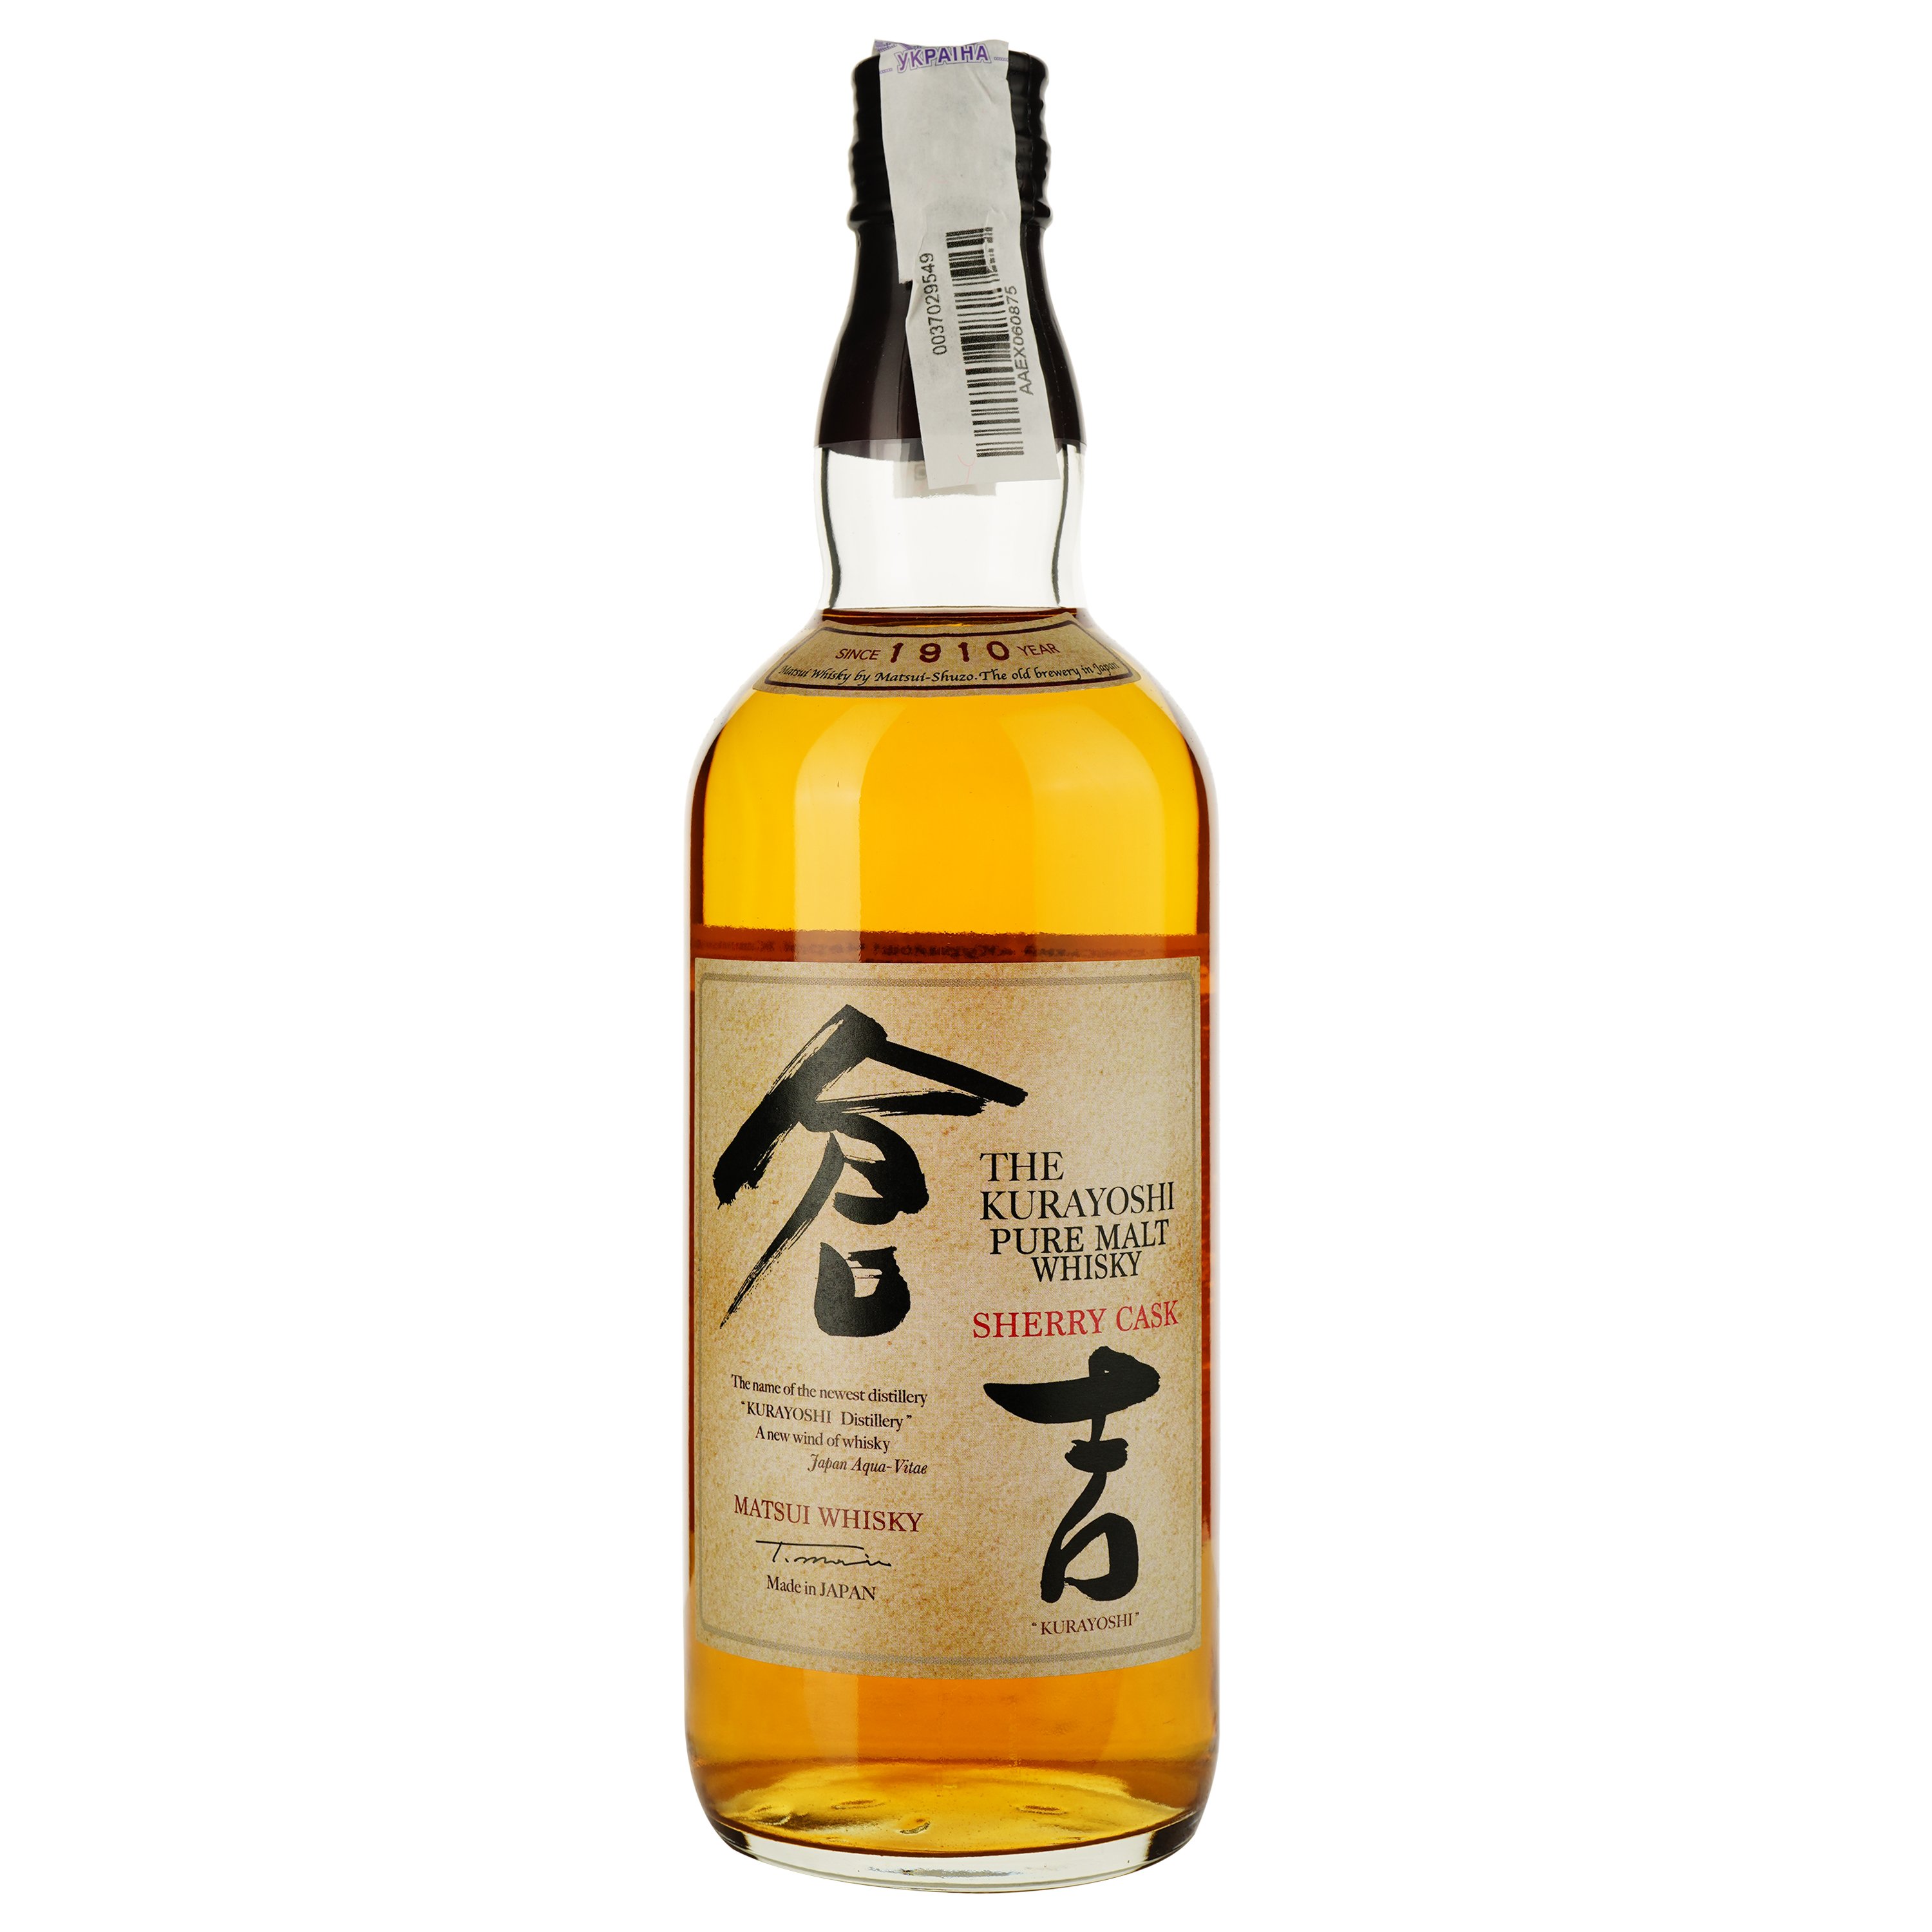 Віскі The Kurayoshi Sherry Cask Japanese Pure Malt Whisky, в подарунковій упаковці, 43%, 0,7 л - фото 2